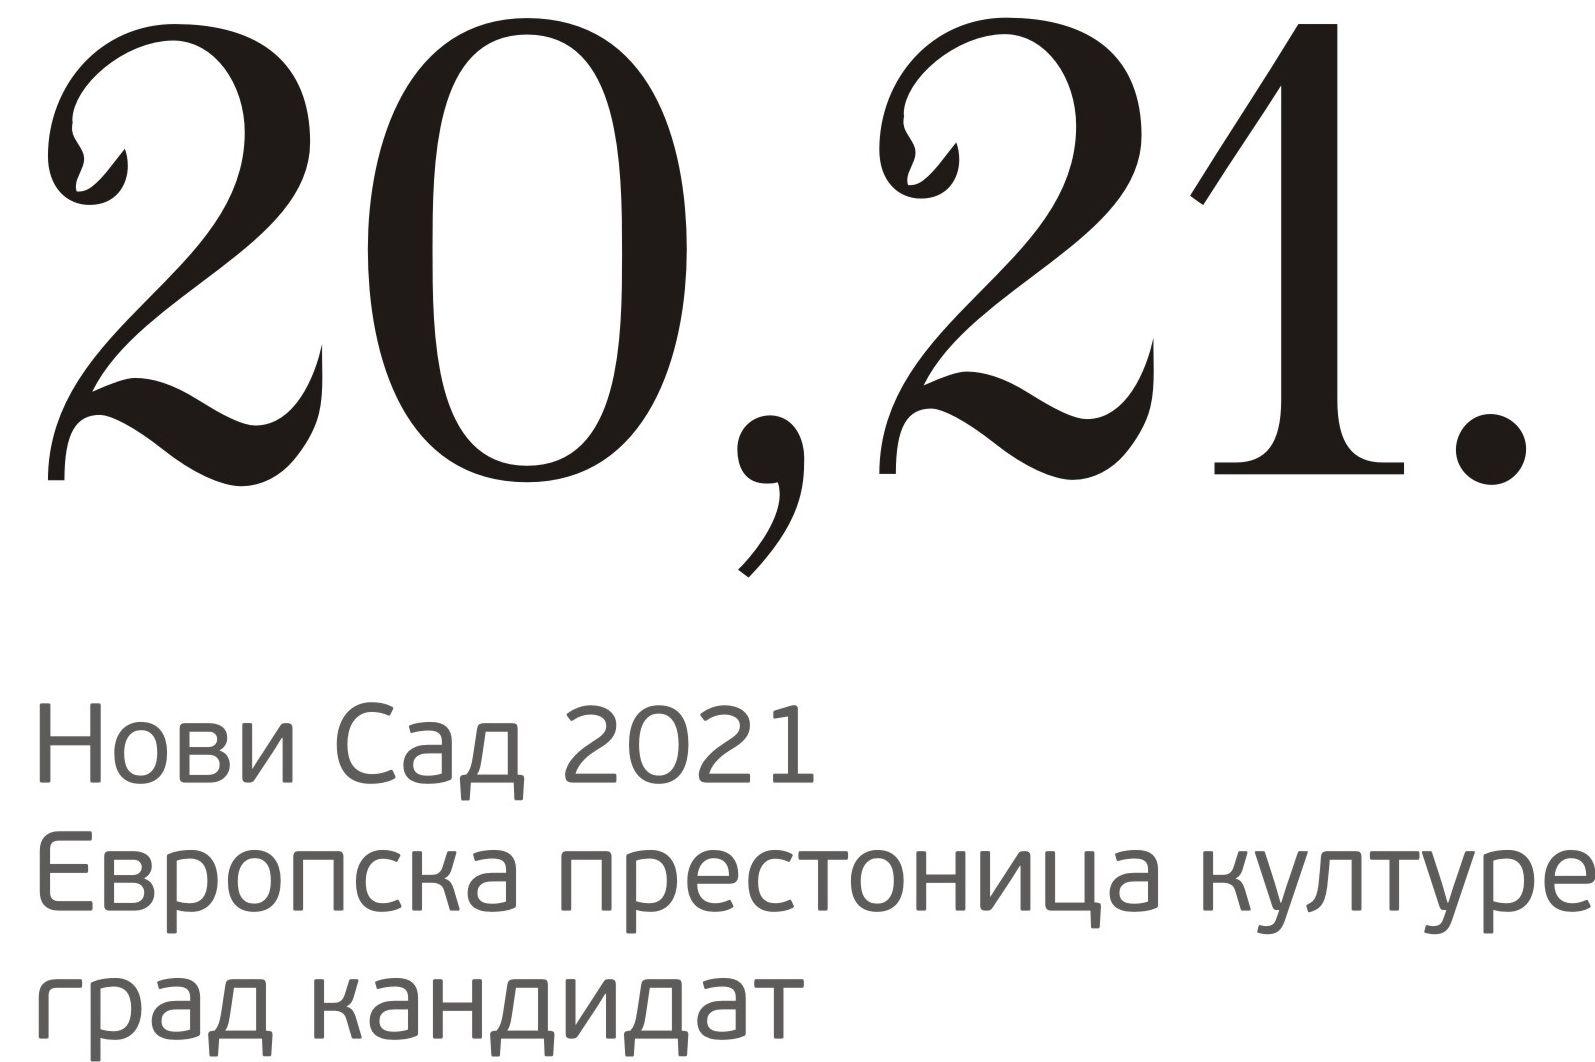 2021 Logo - New Logo and Design of the Project Novi Sad 2021 - Нови Сад ...